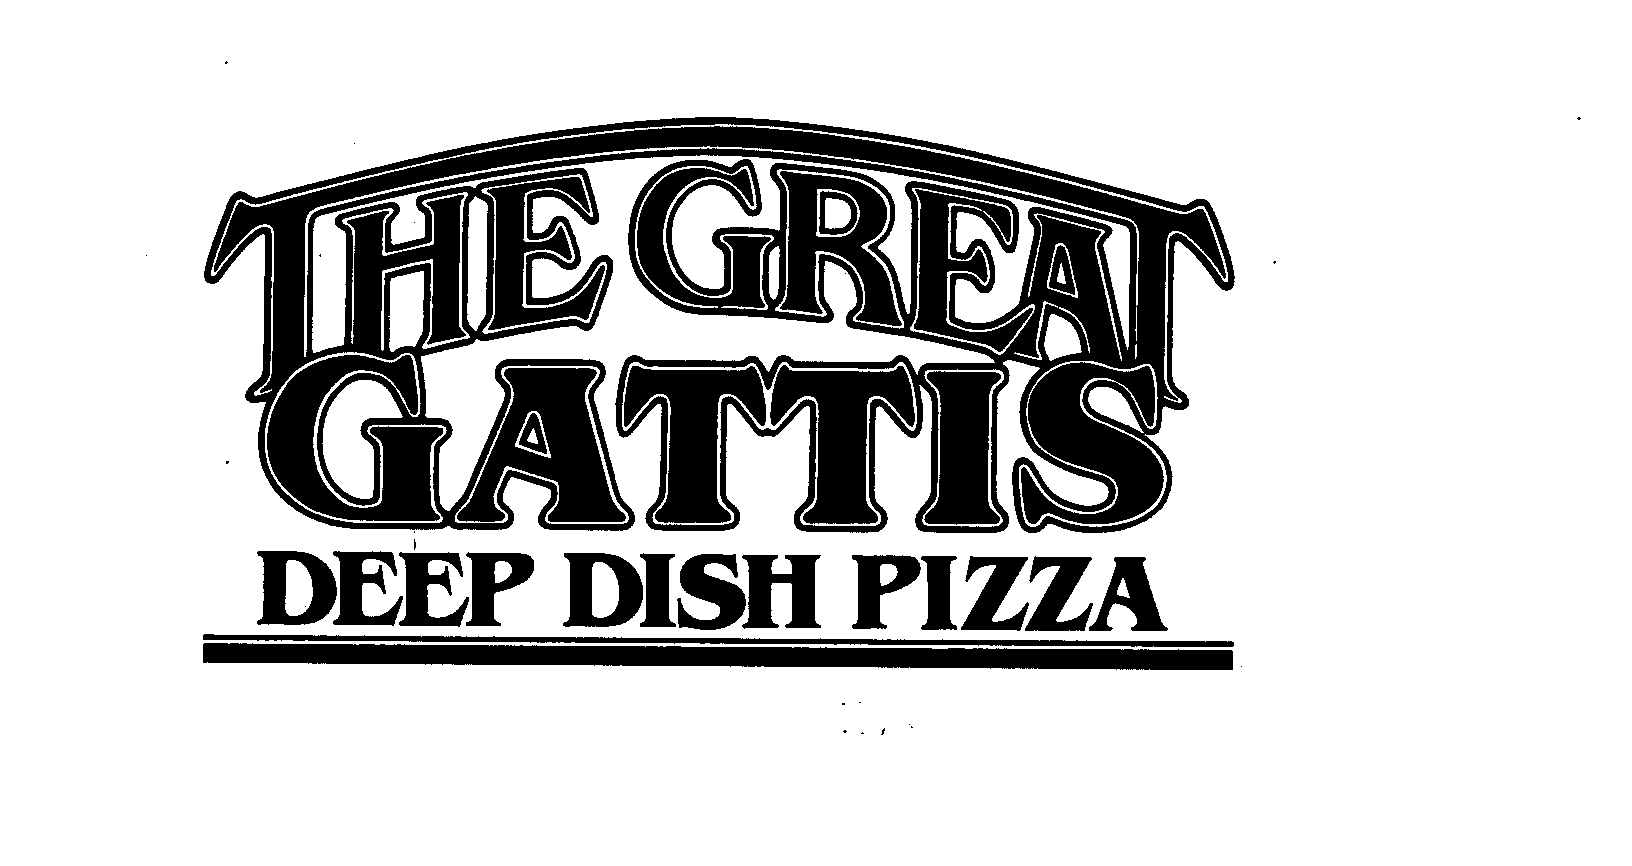  THE GREAT GATTIS DEEP DISH PIZZA